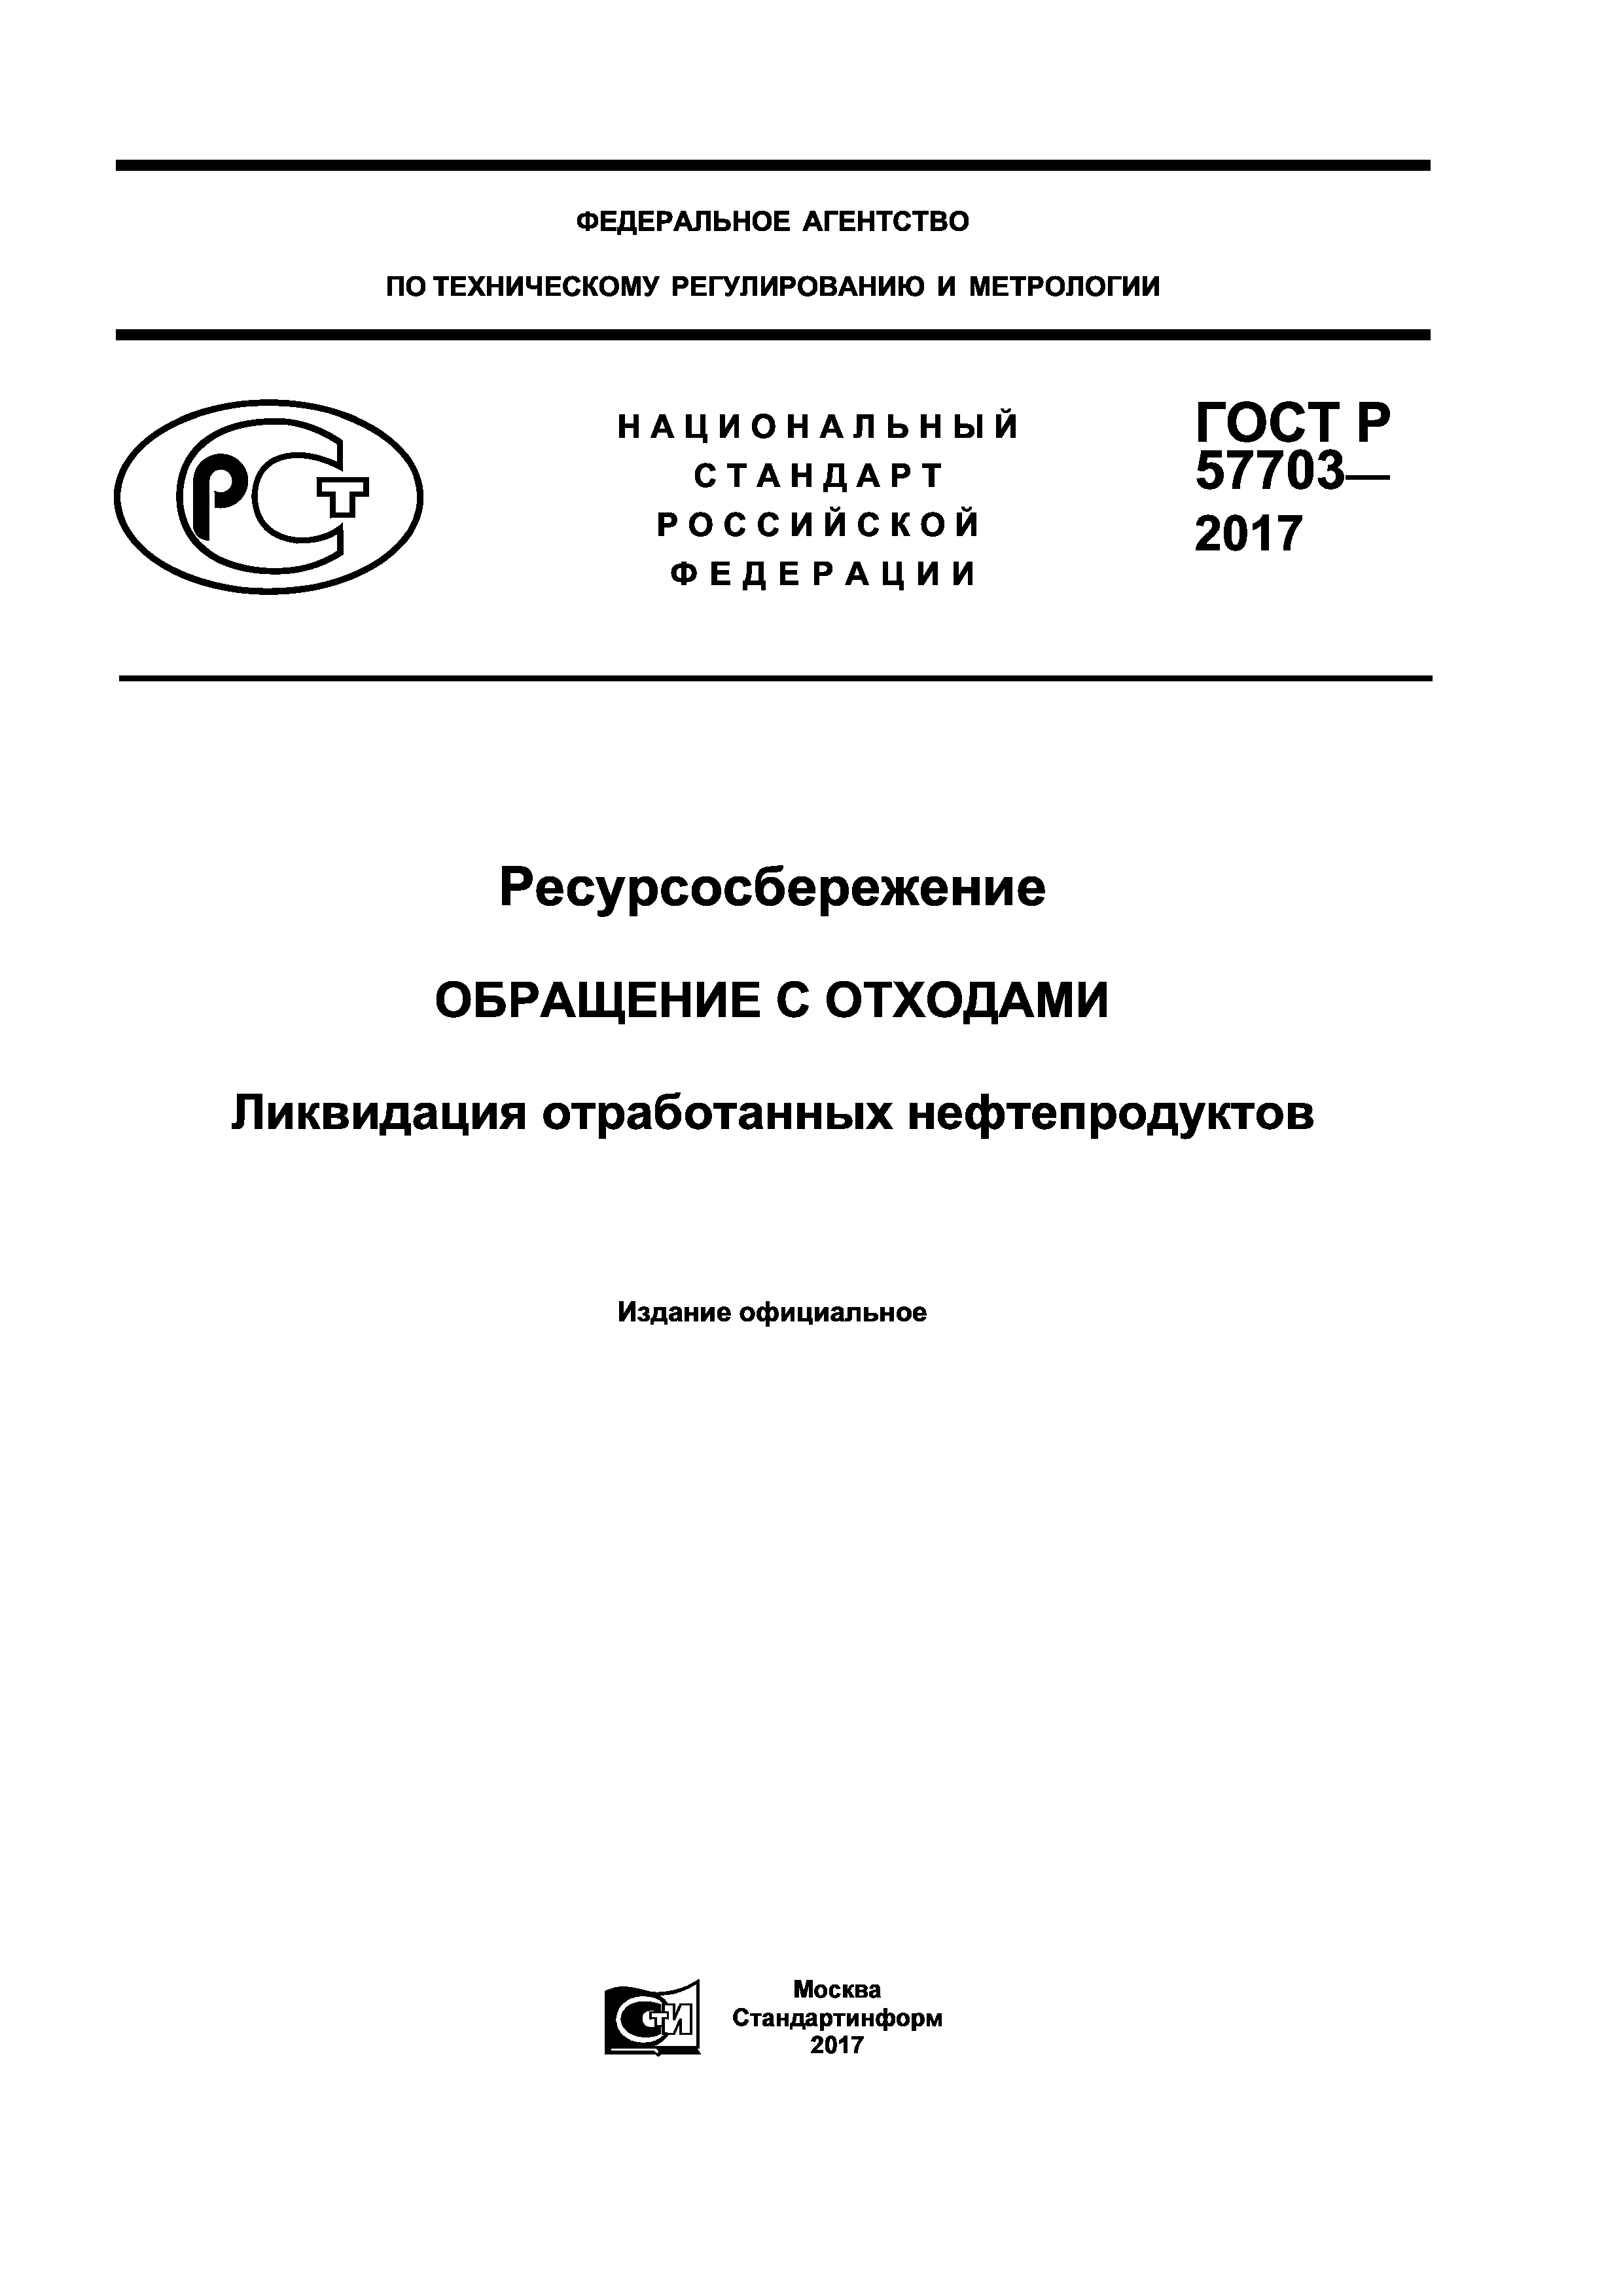 ГОСТ Р 57703-2017